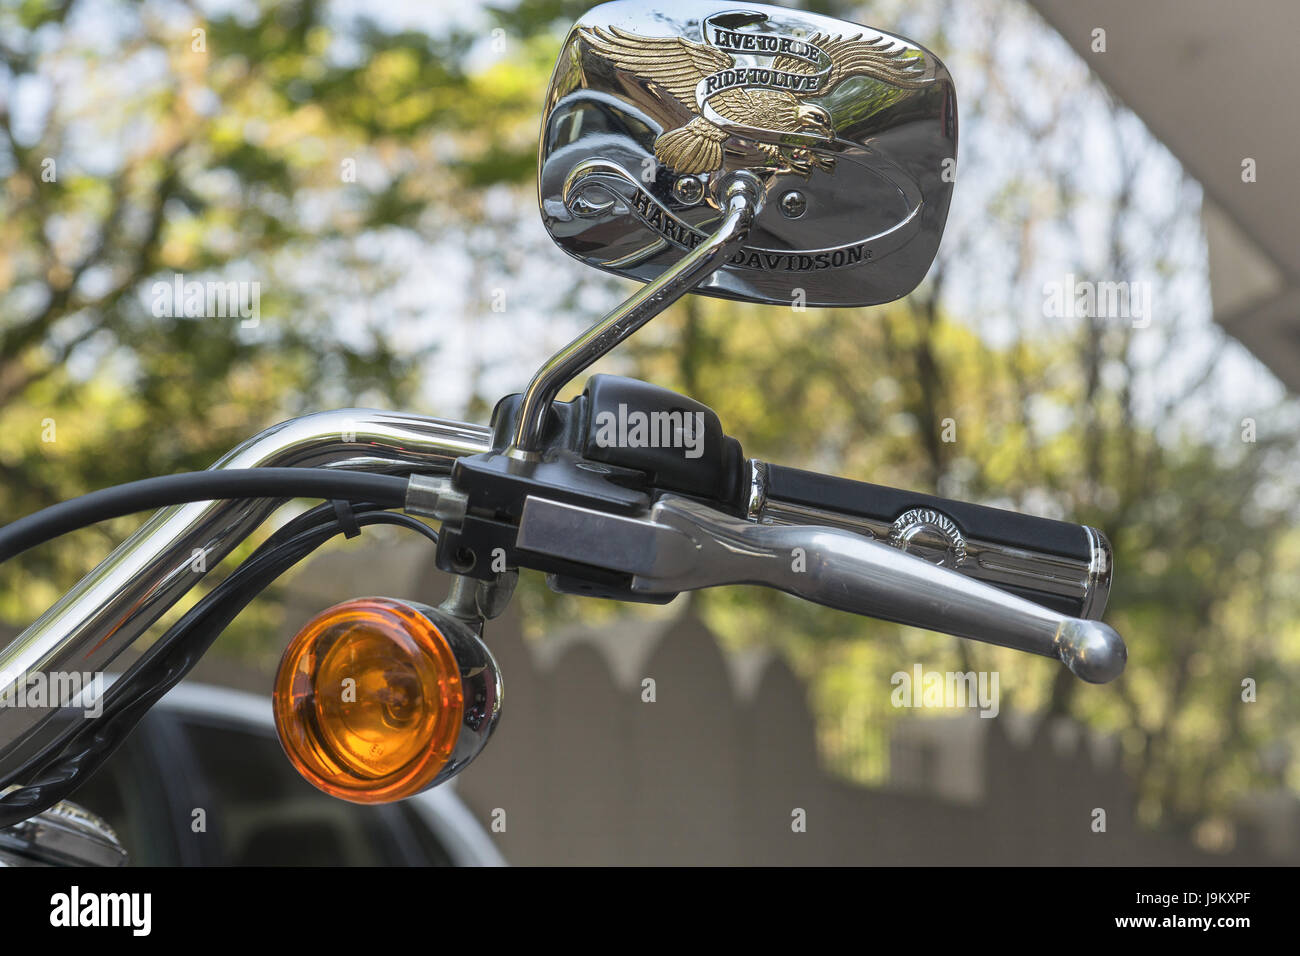 Harley Davidson Moto, India, Asia Foto Stock